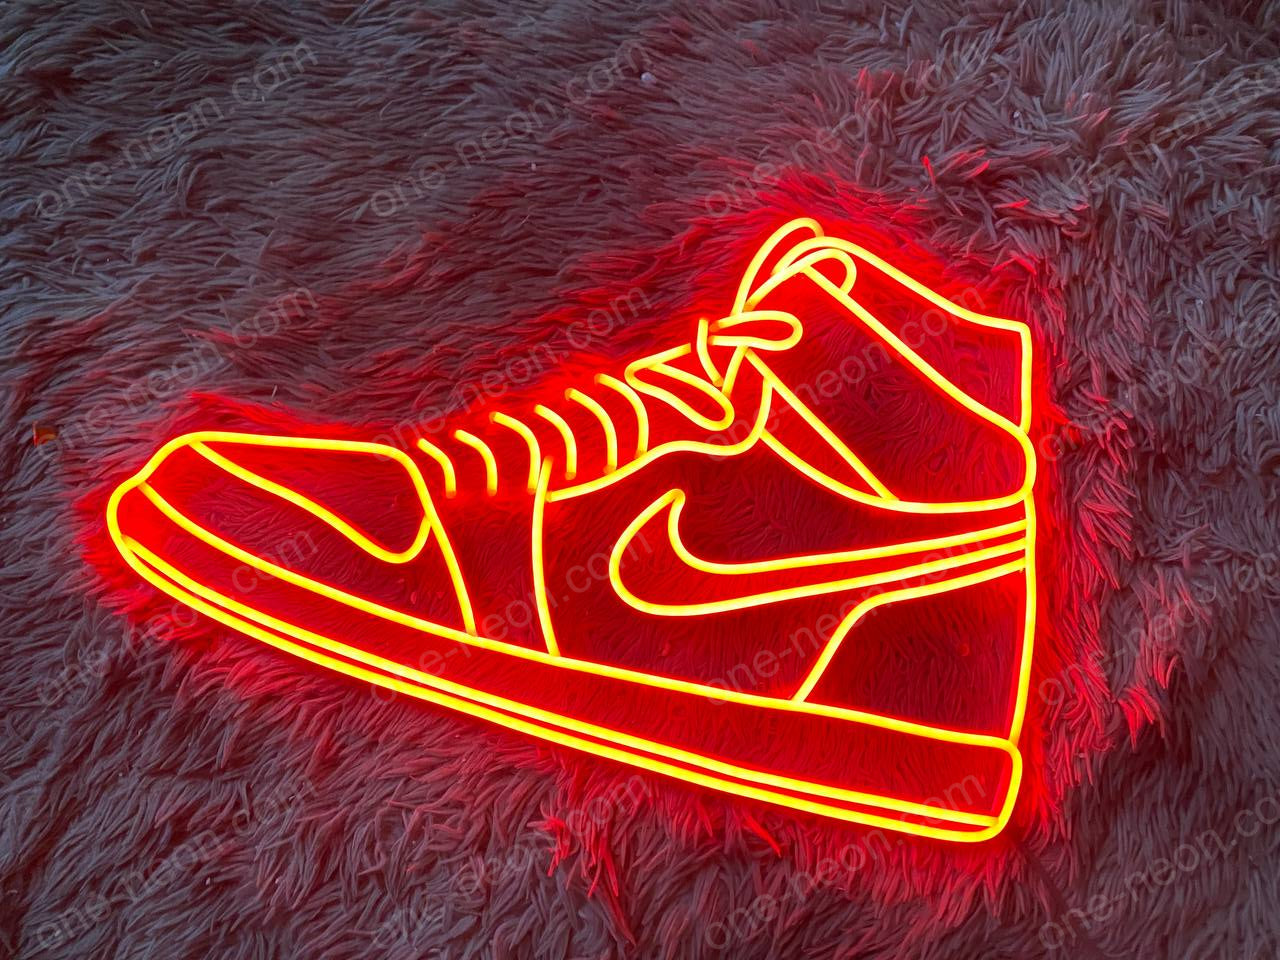 Air Jordan 1 Shoe | LED Neon Sign | ONE Neon